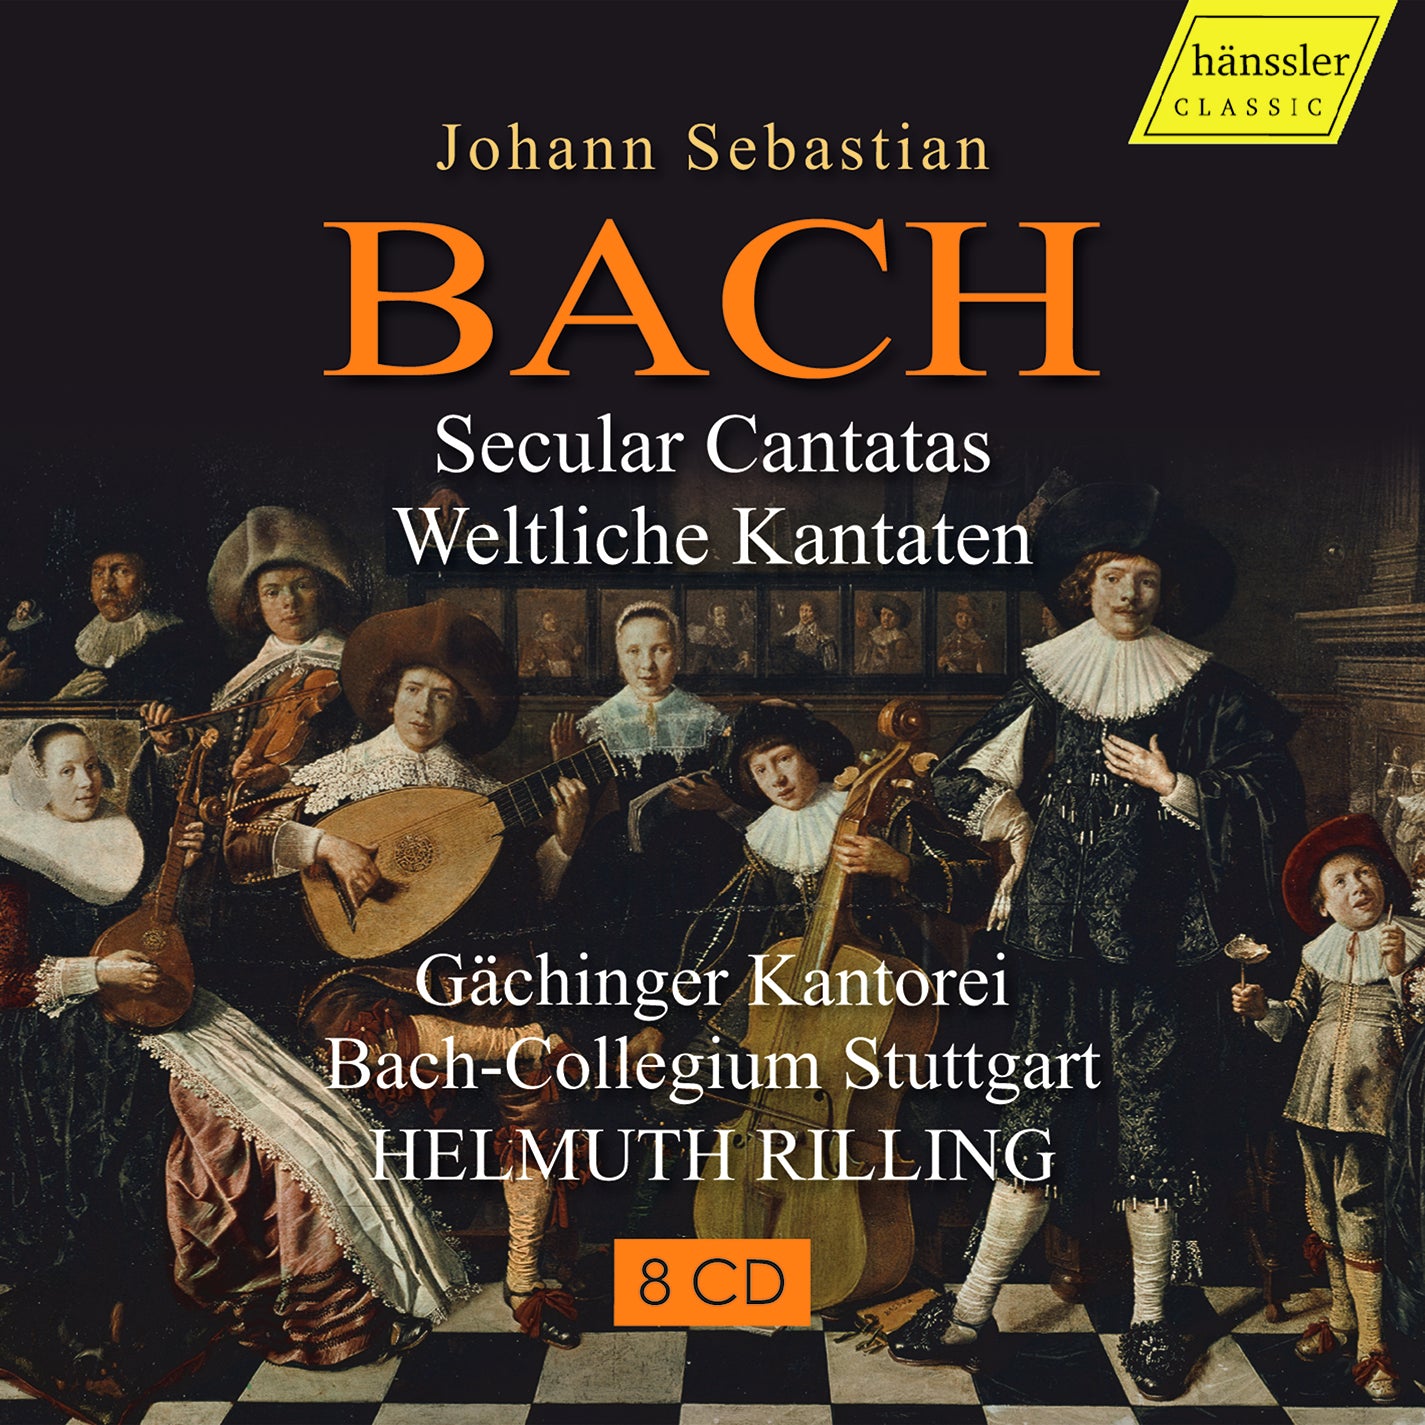 Bach: Secular Cantatas - Weltliche Kantaten